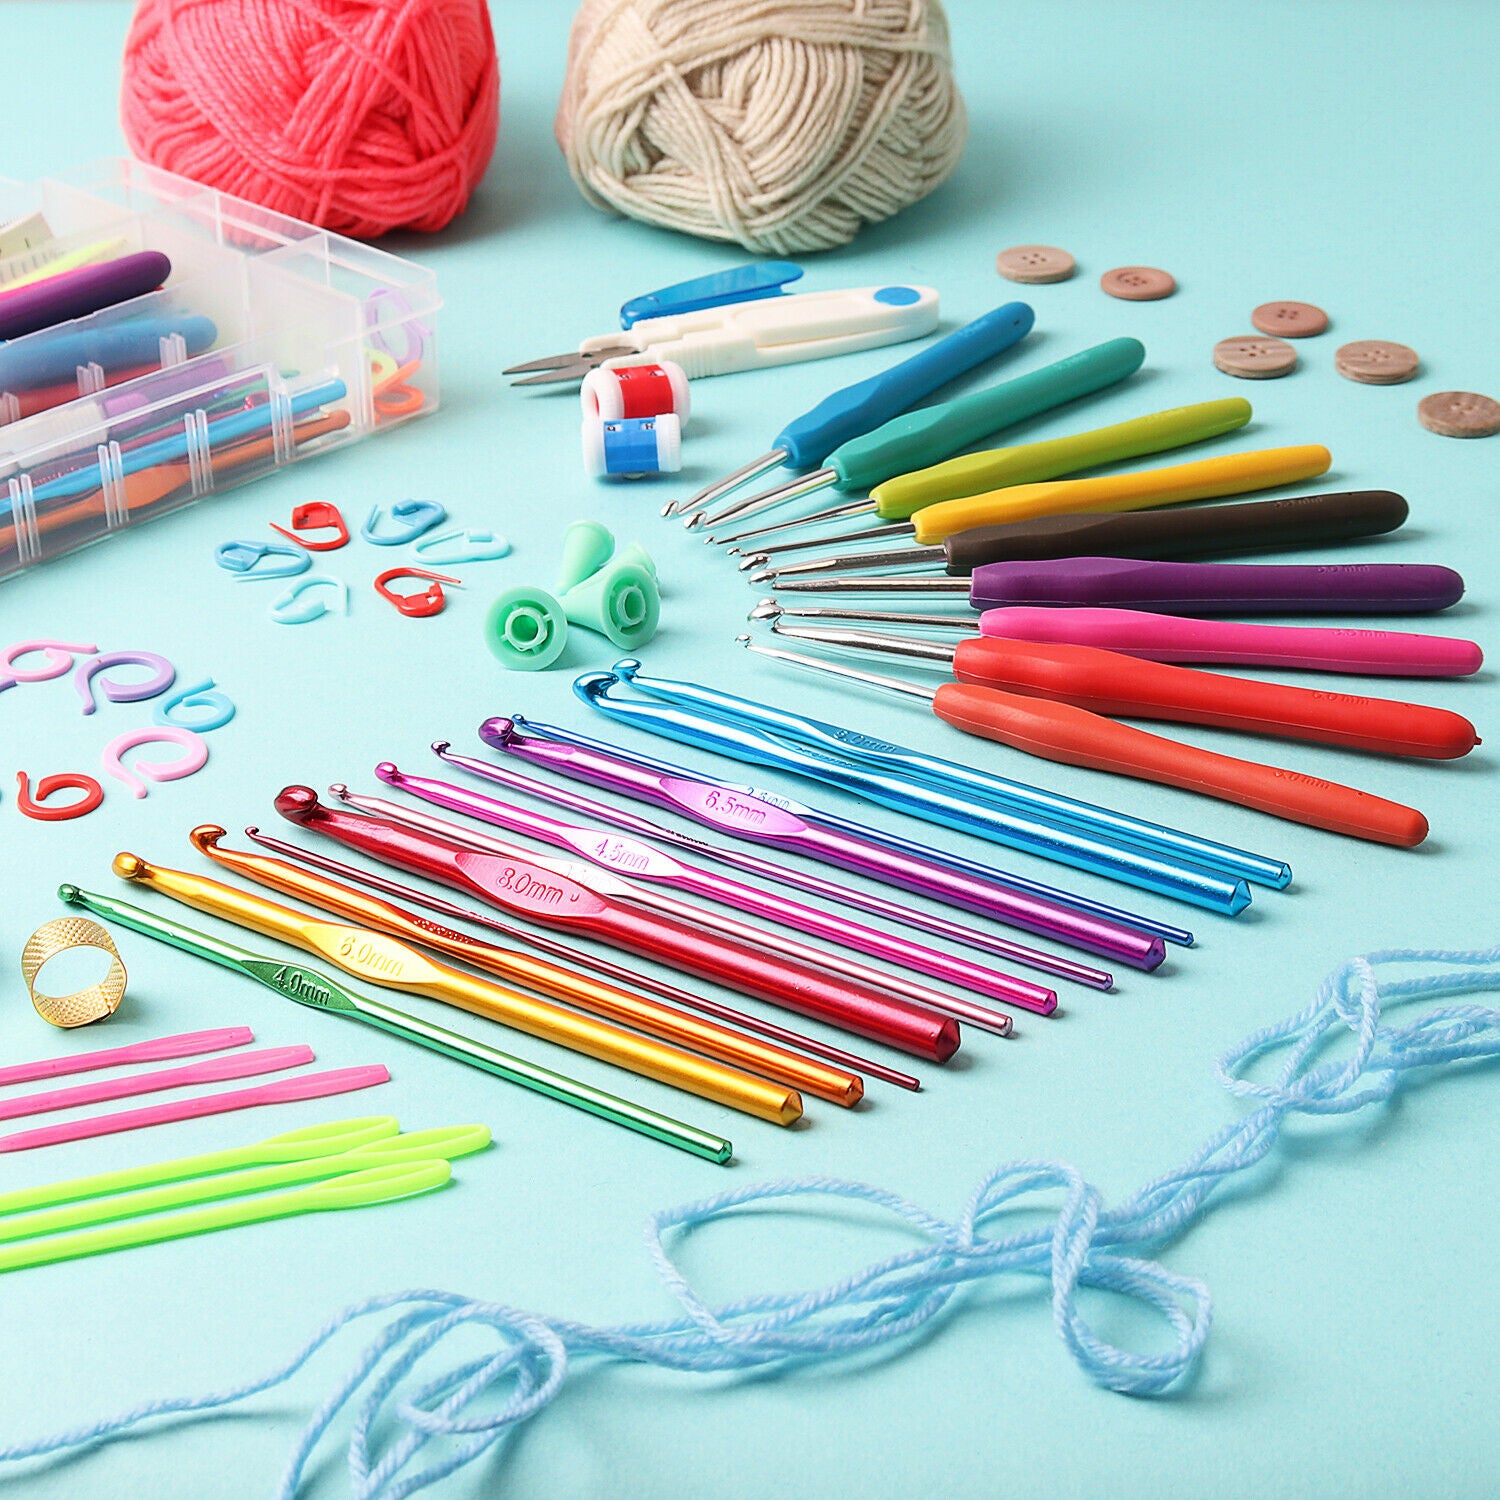 Crochet Hooks - Crochet Kit - Set of Hooks, Yarn, & Supplies - 73 Piece Starter Set -